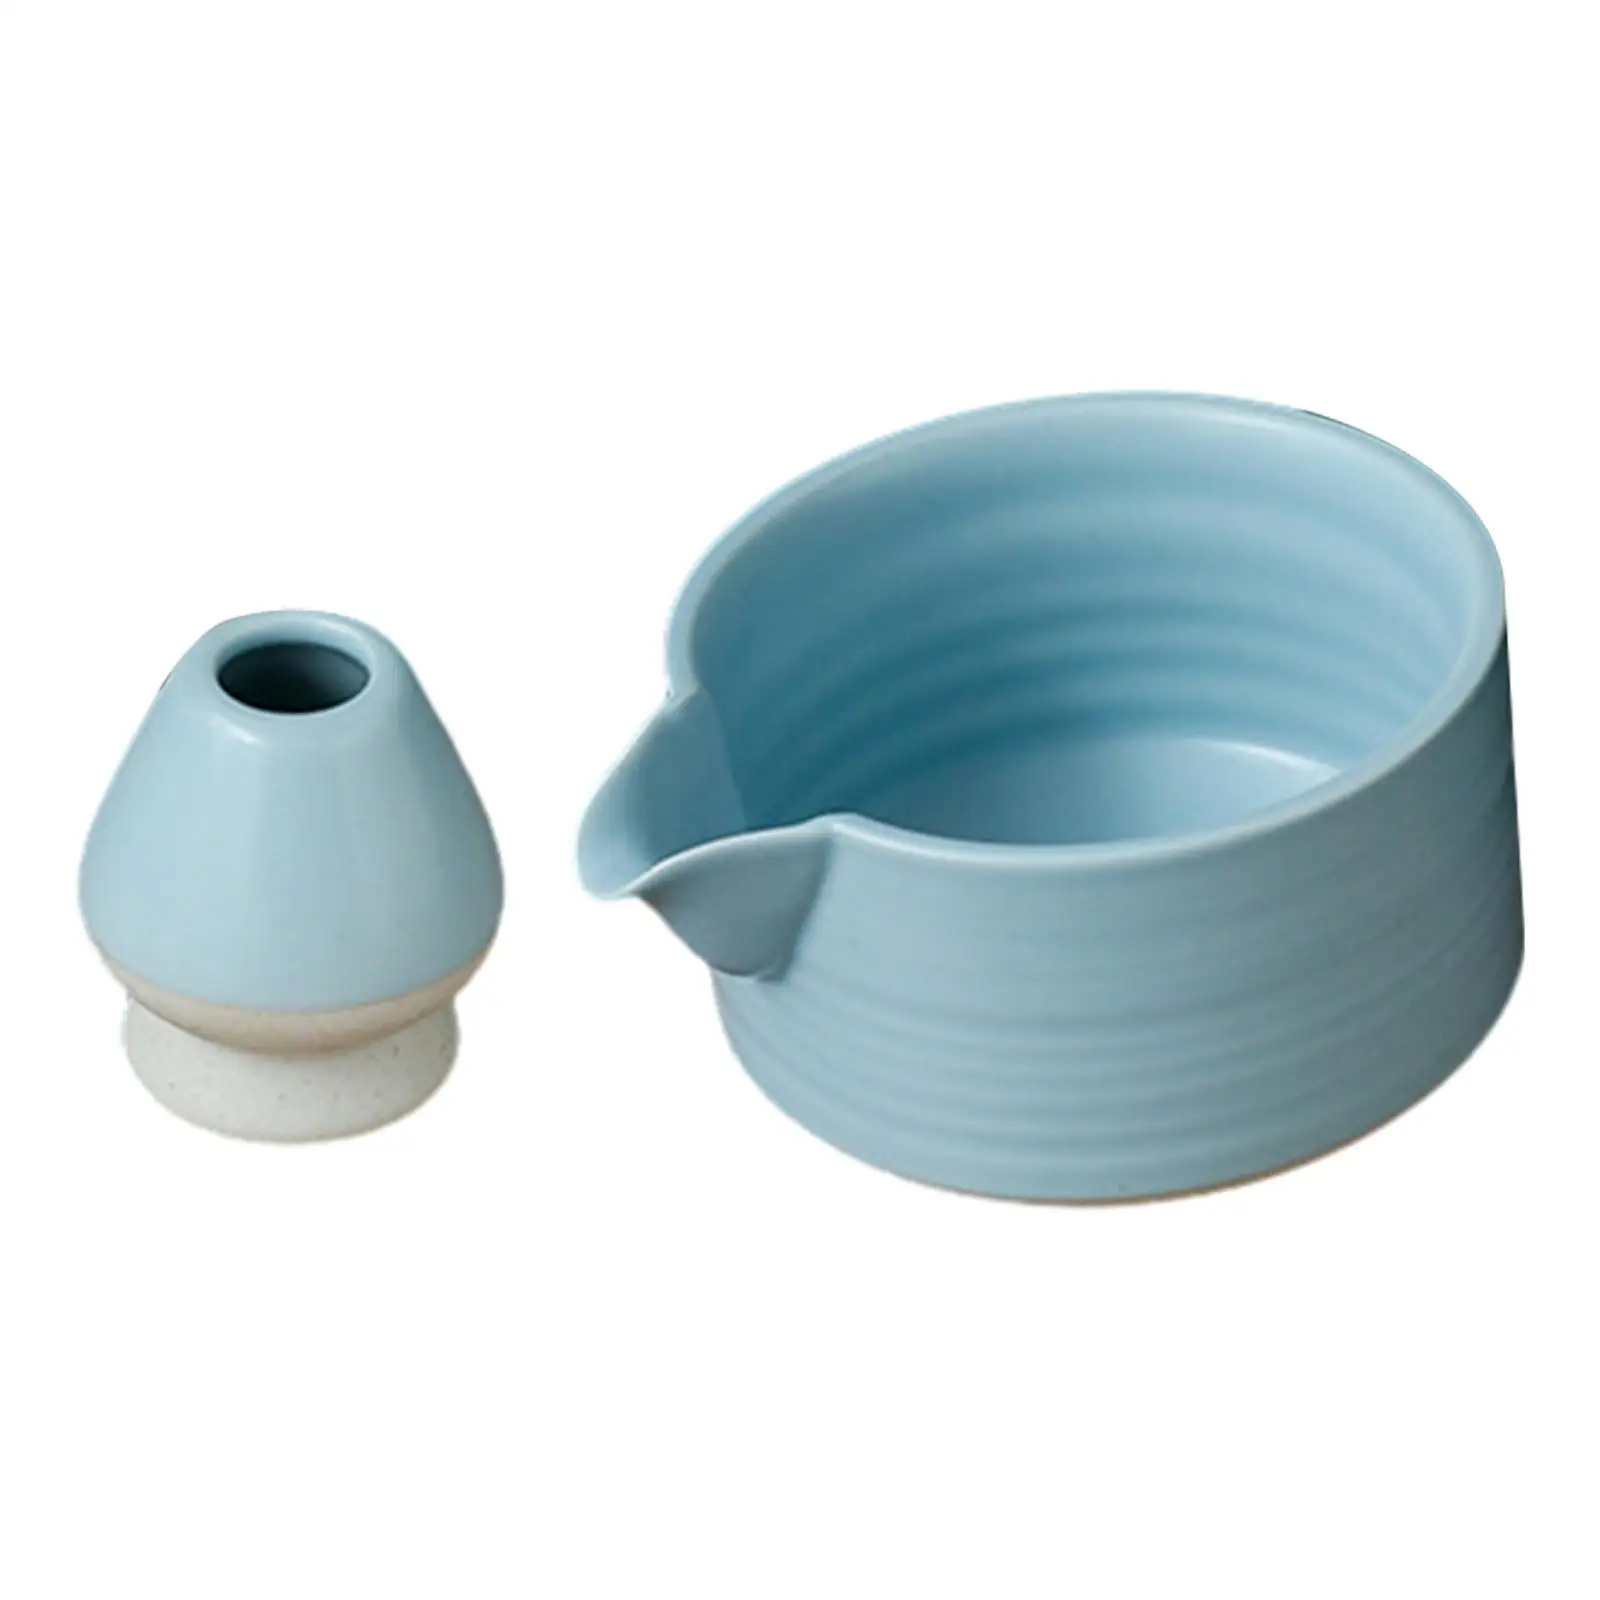 2 Pieces Japanese Ceramic Matcha Bowl Matcha Bowl and Matcha Whisk Holder Set for Japanese Matcha Preparation Tea Lovers Gift